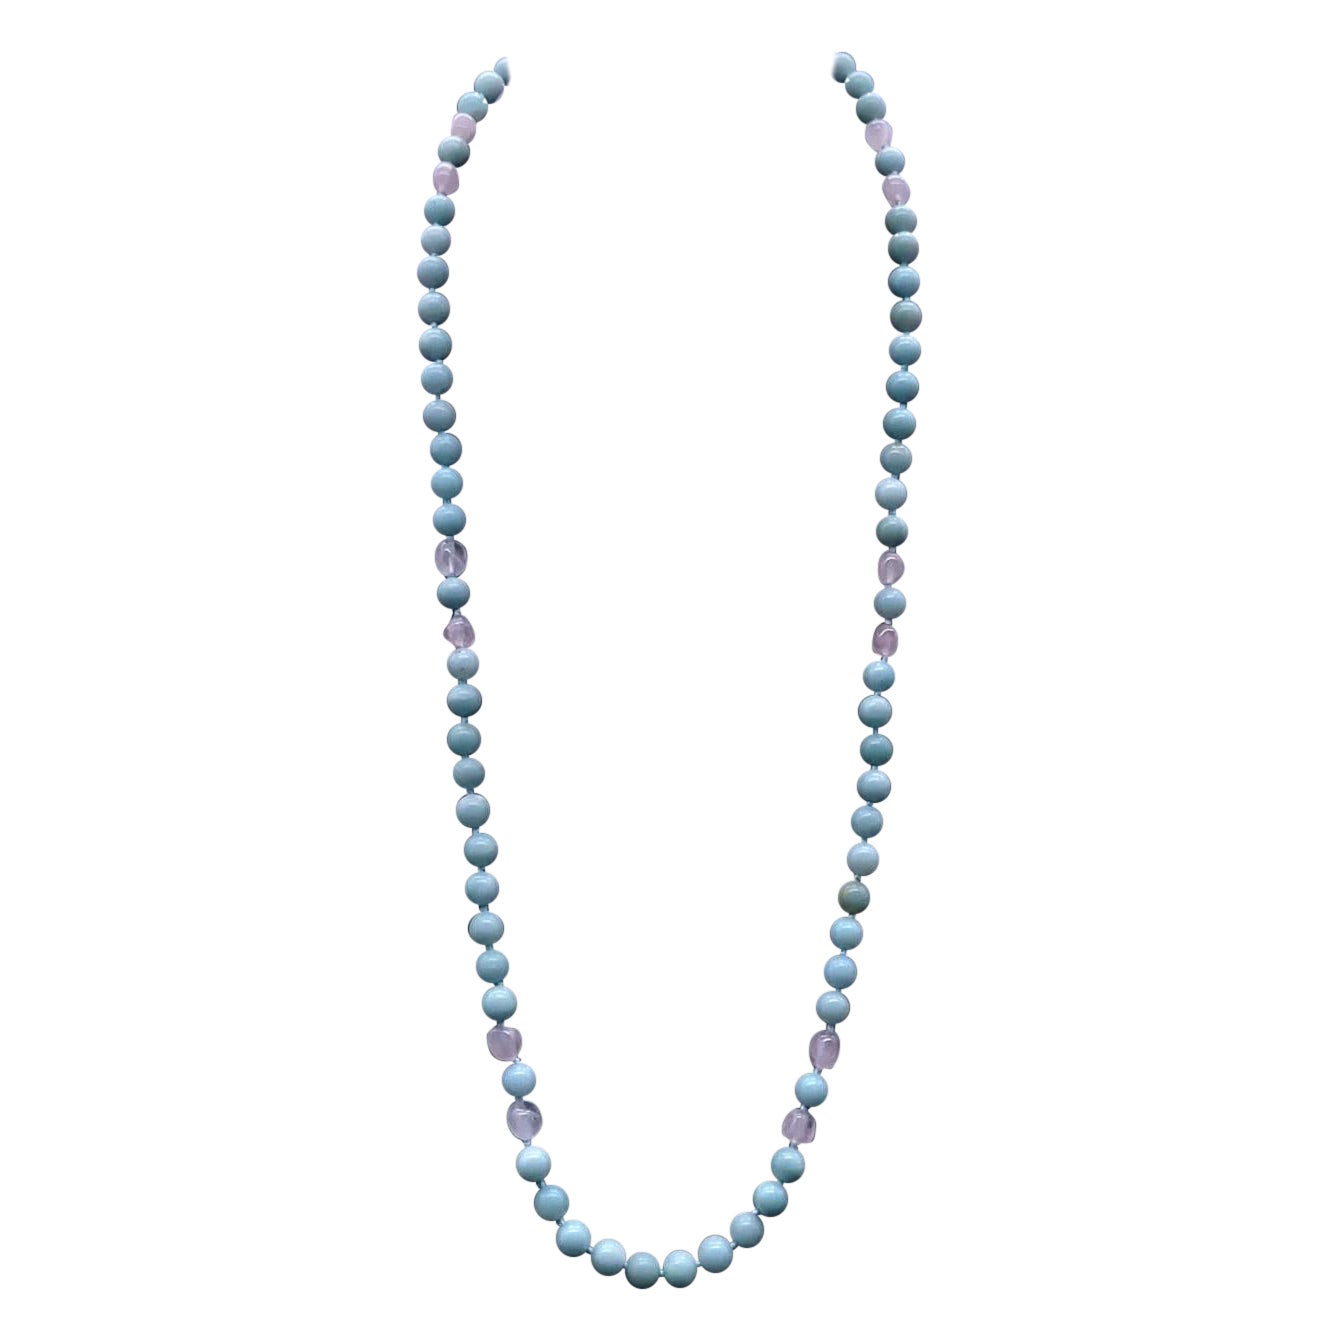 A.Jeschel Stylish Amazonite and Rose Quartz long necklace. For Sale